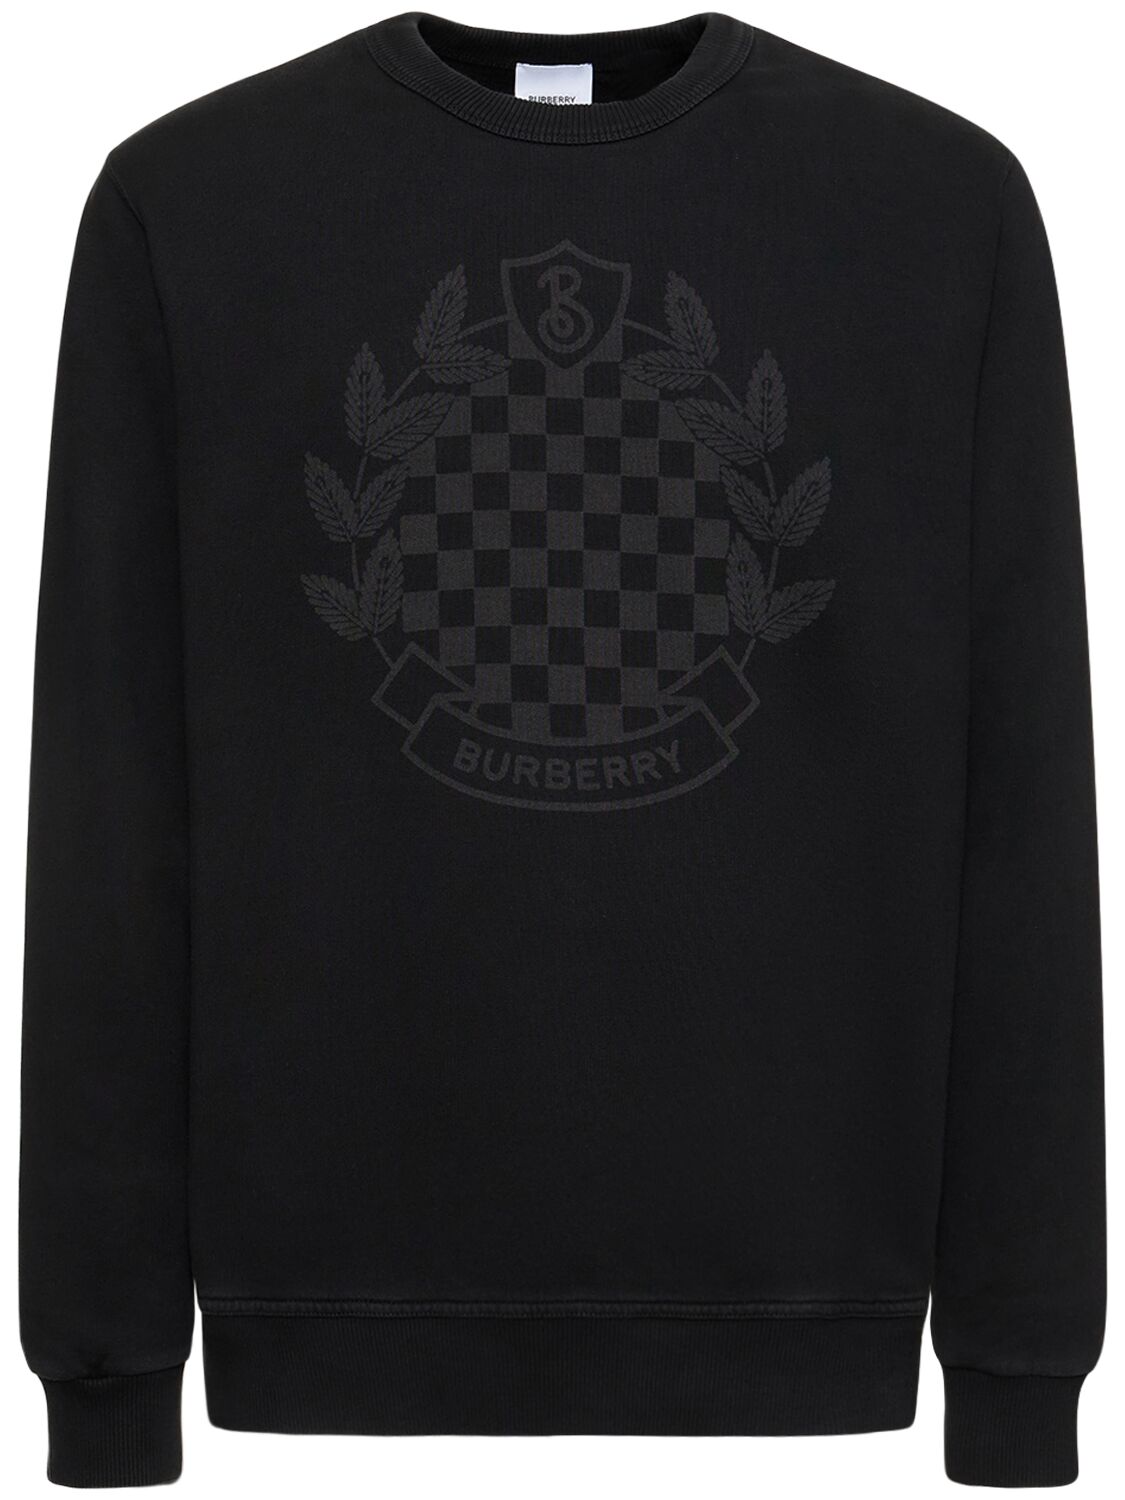 Image of Surbiton Checkerboard Printed Sweatshirt